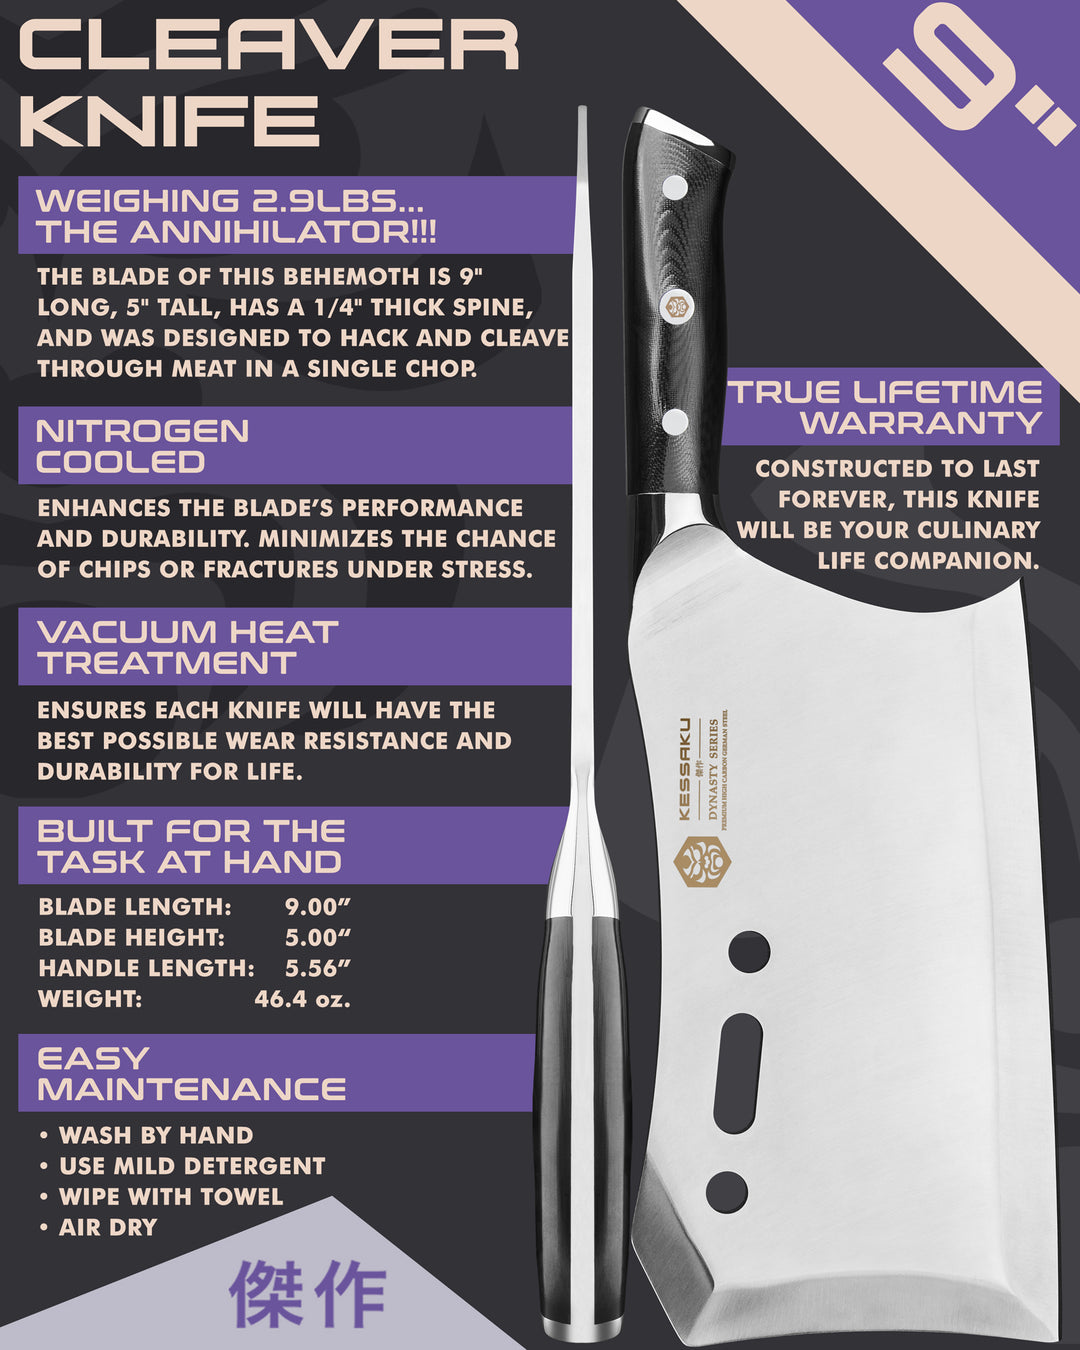 Kessaku Dynasty Series Butcher Knife uses, dimensions, maintenance, warranty info, and additional blade treatments